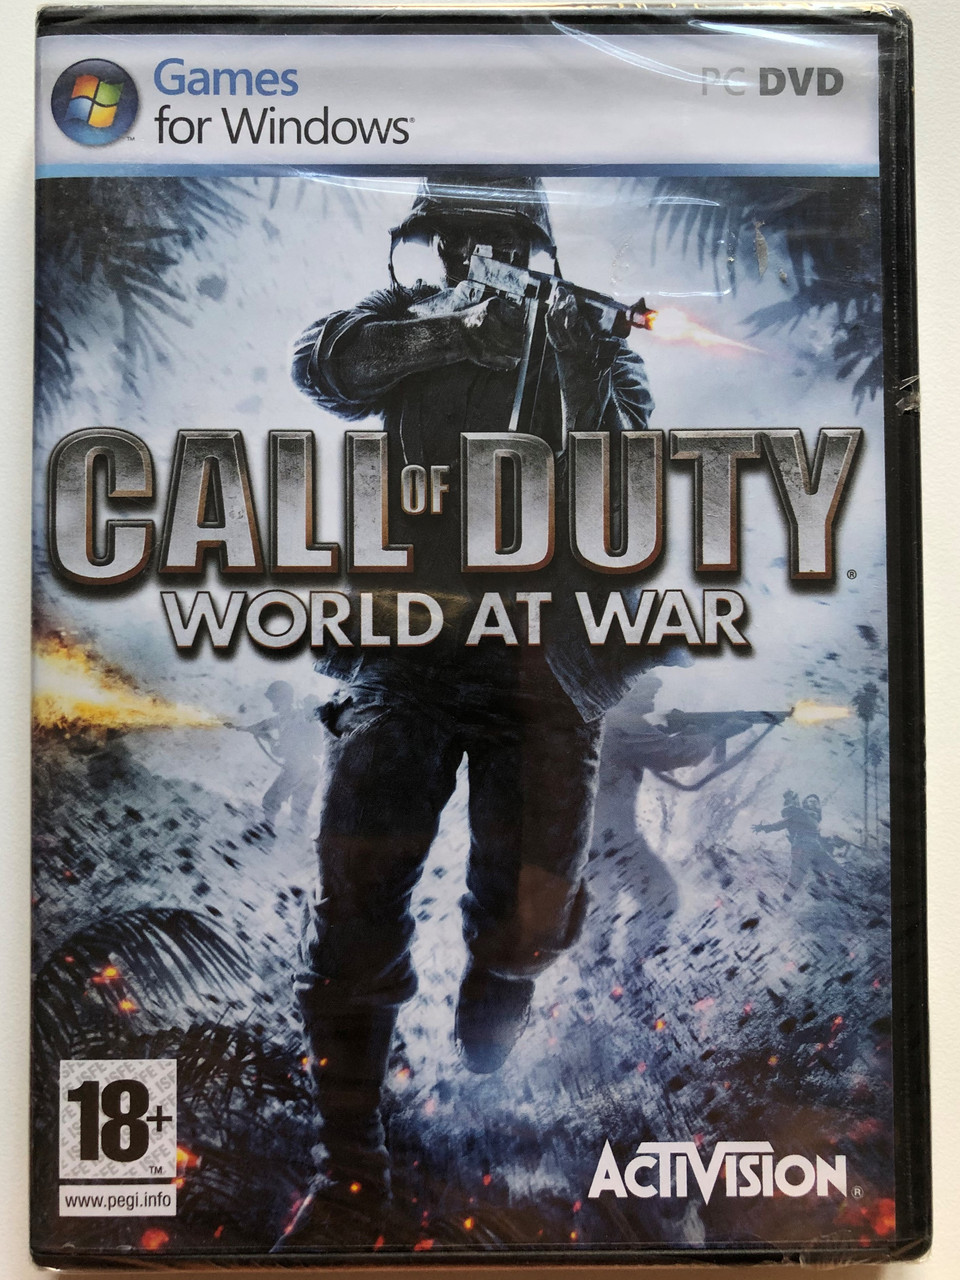 Call of Duty: World at War - PC / DVD - bibleinmylanguage